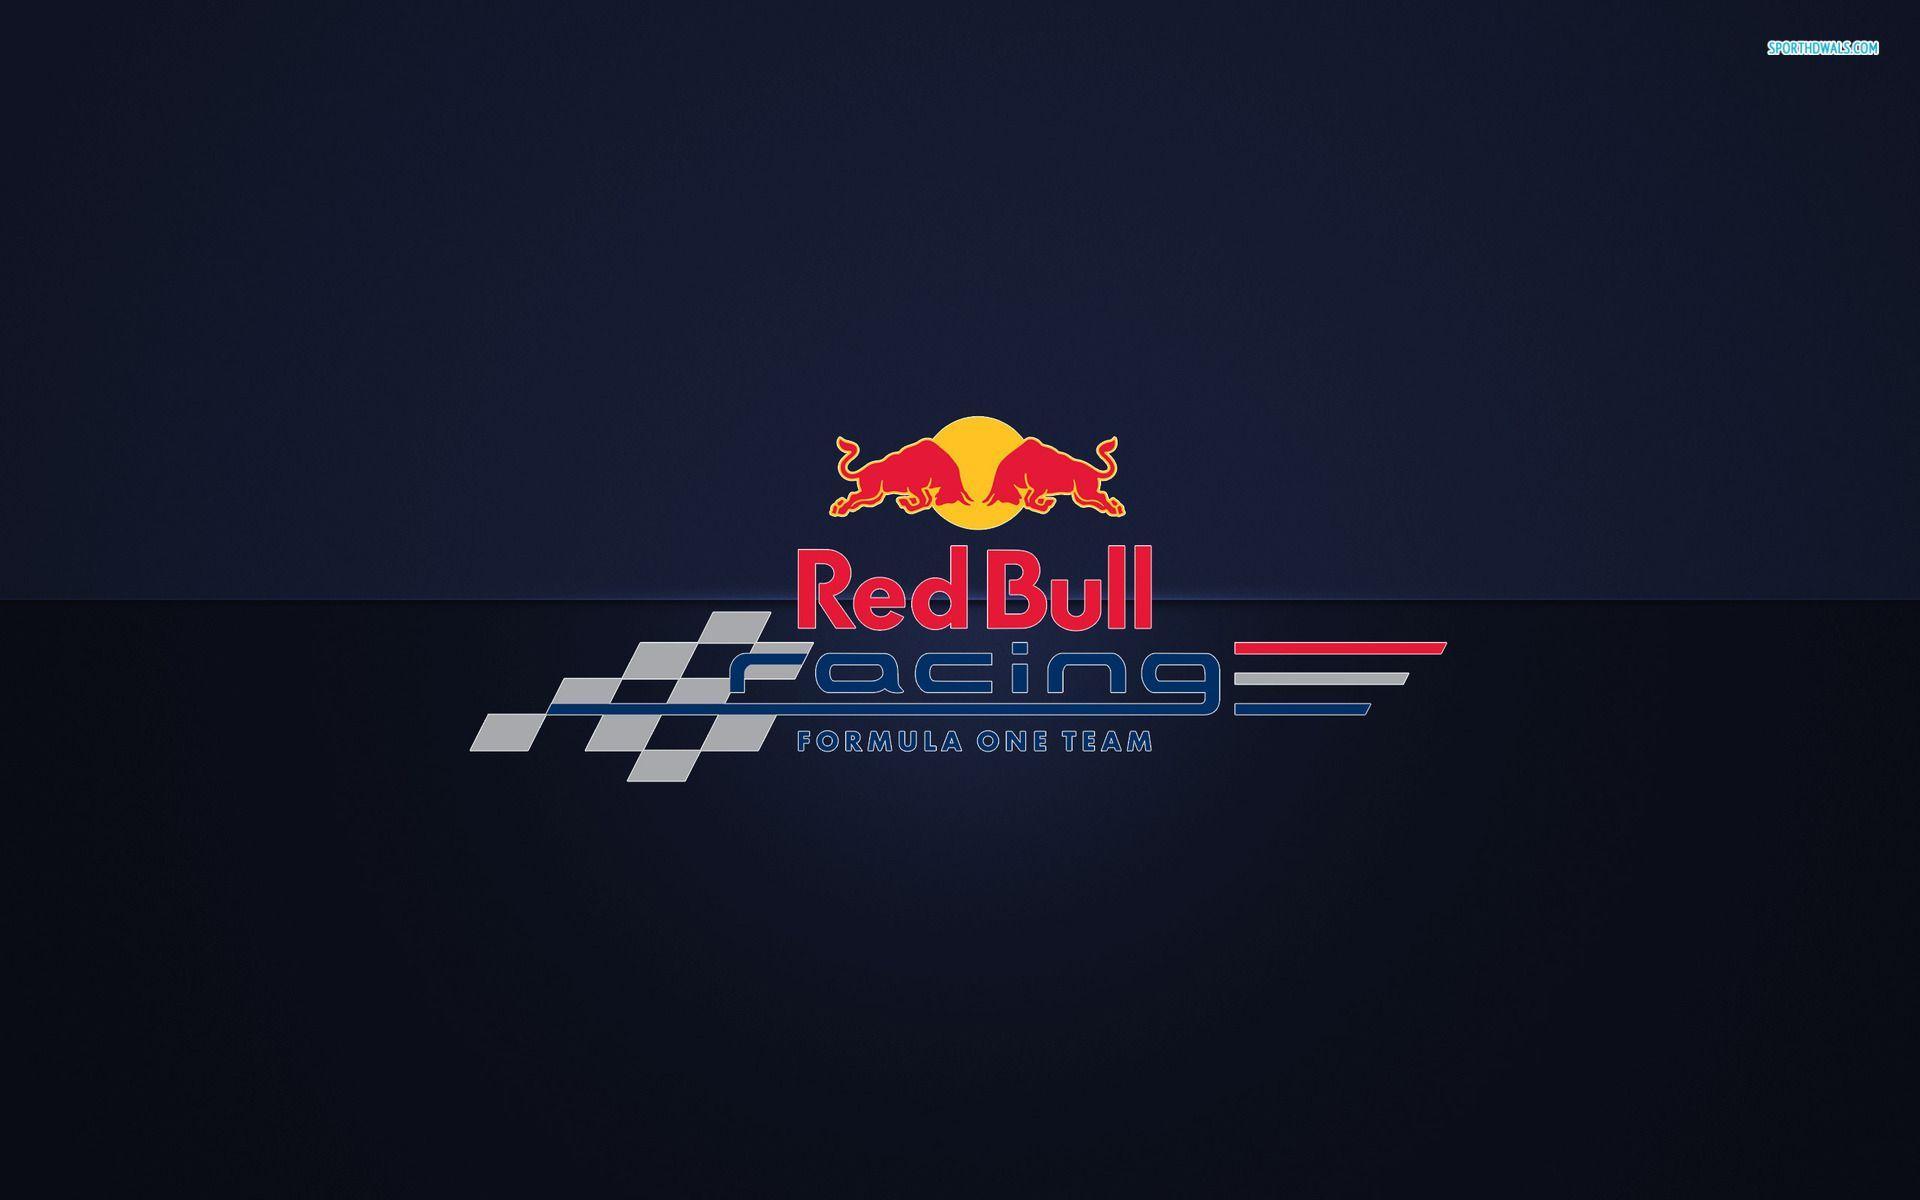 Red Bull Racing Team Wallpaper 12825 High Resolution. download